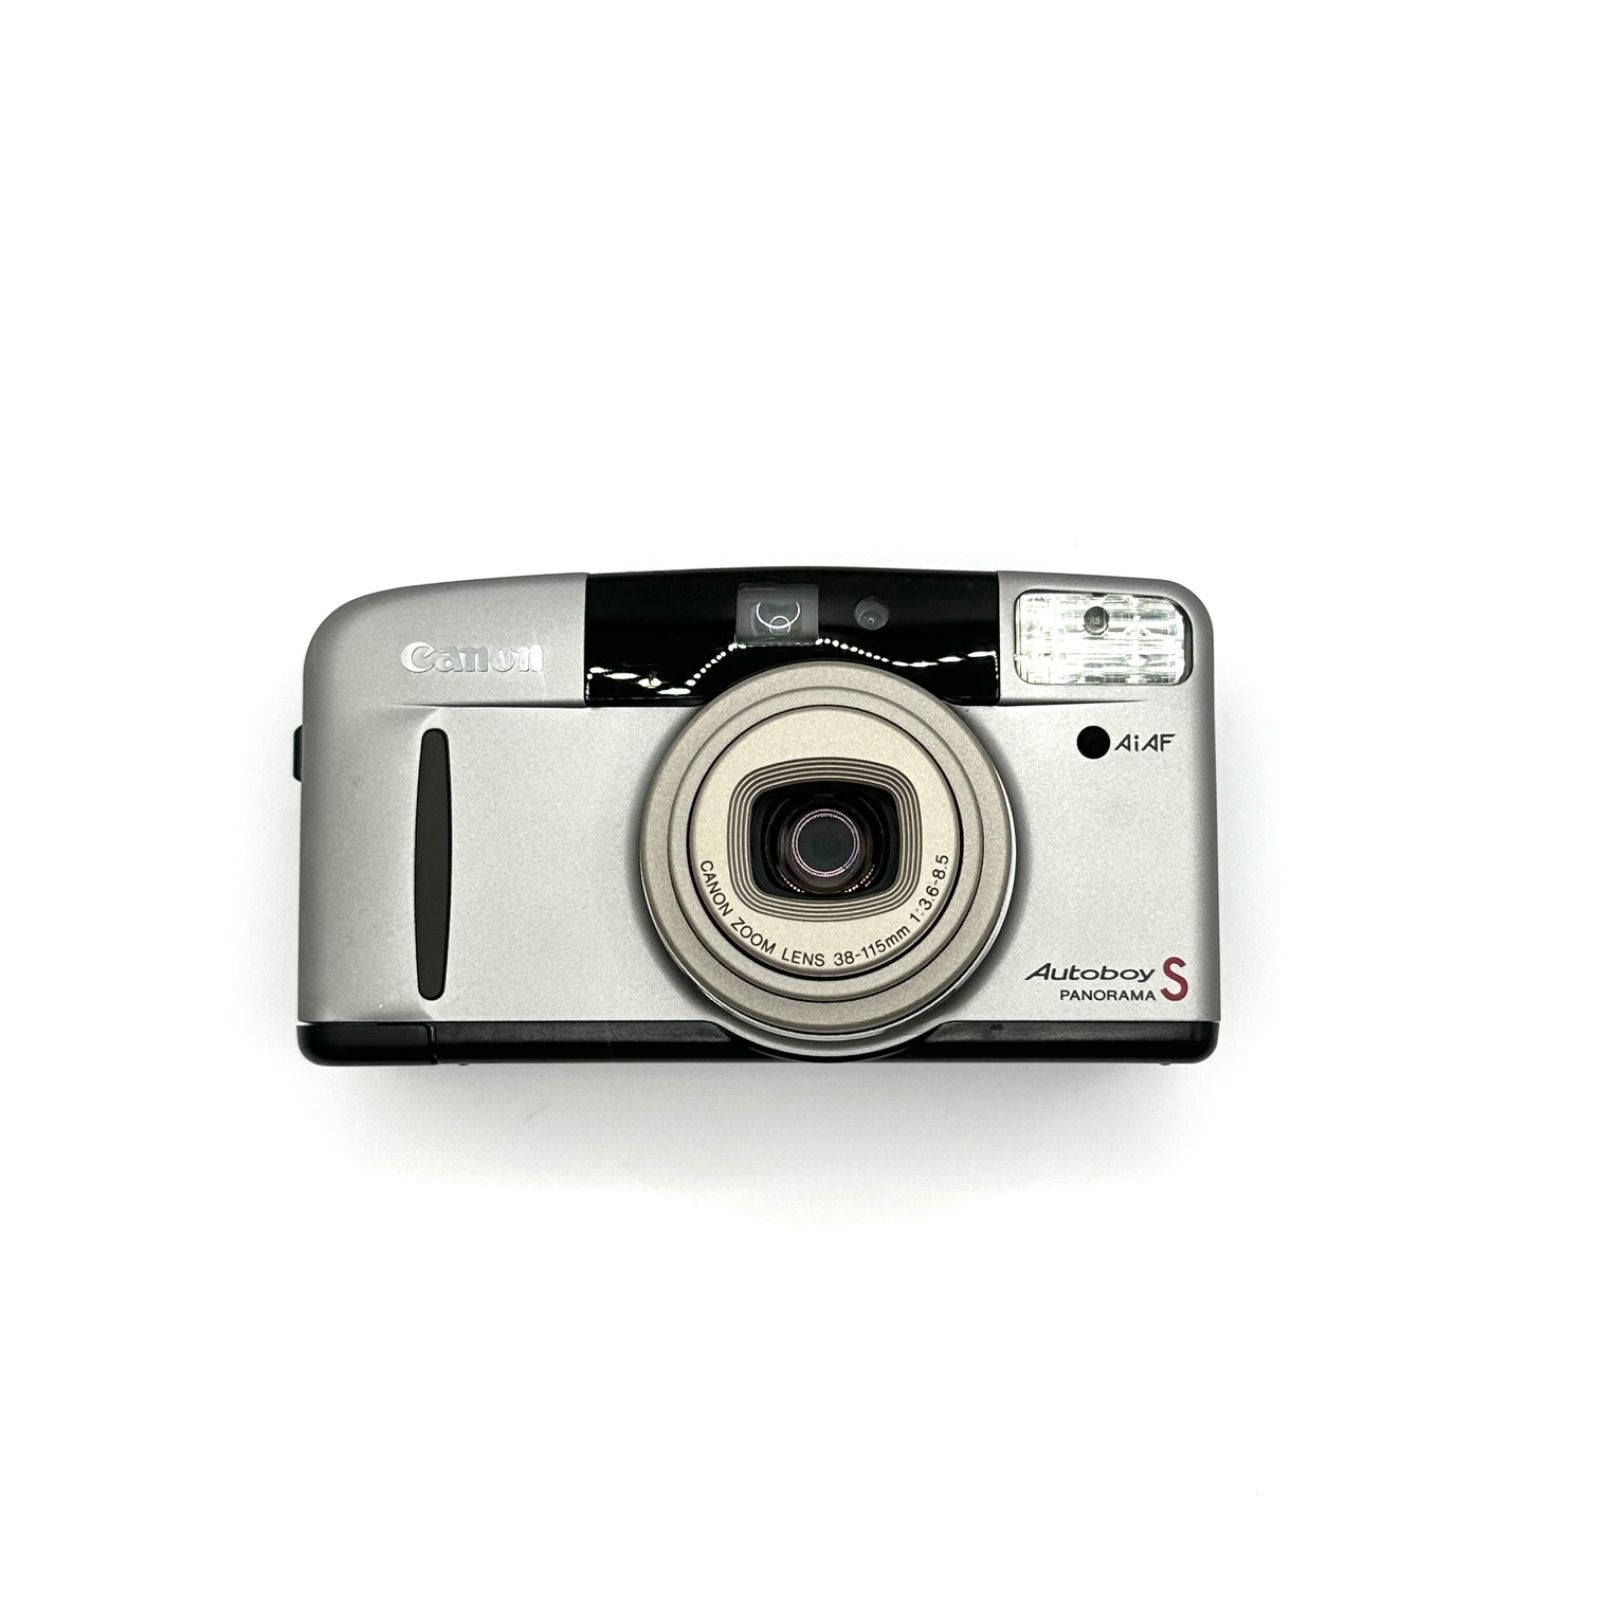 Canon Autoboy S Panorama - フィルムカメラ